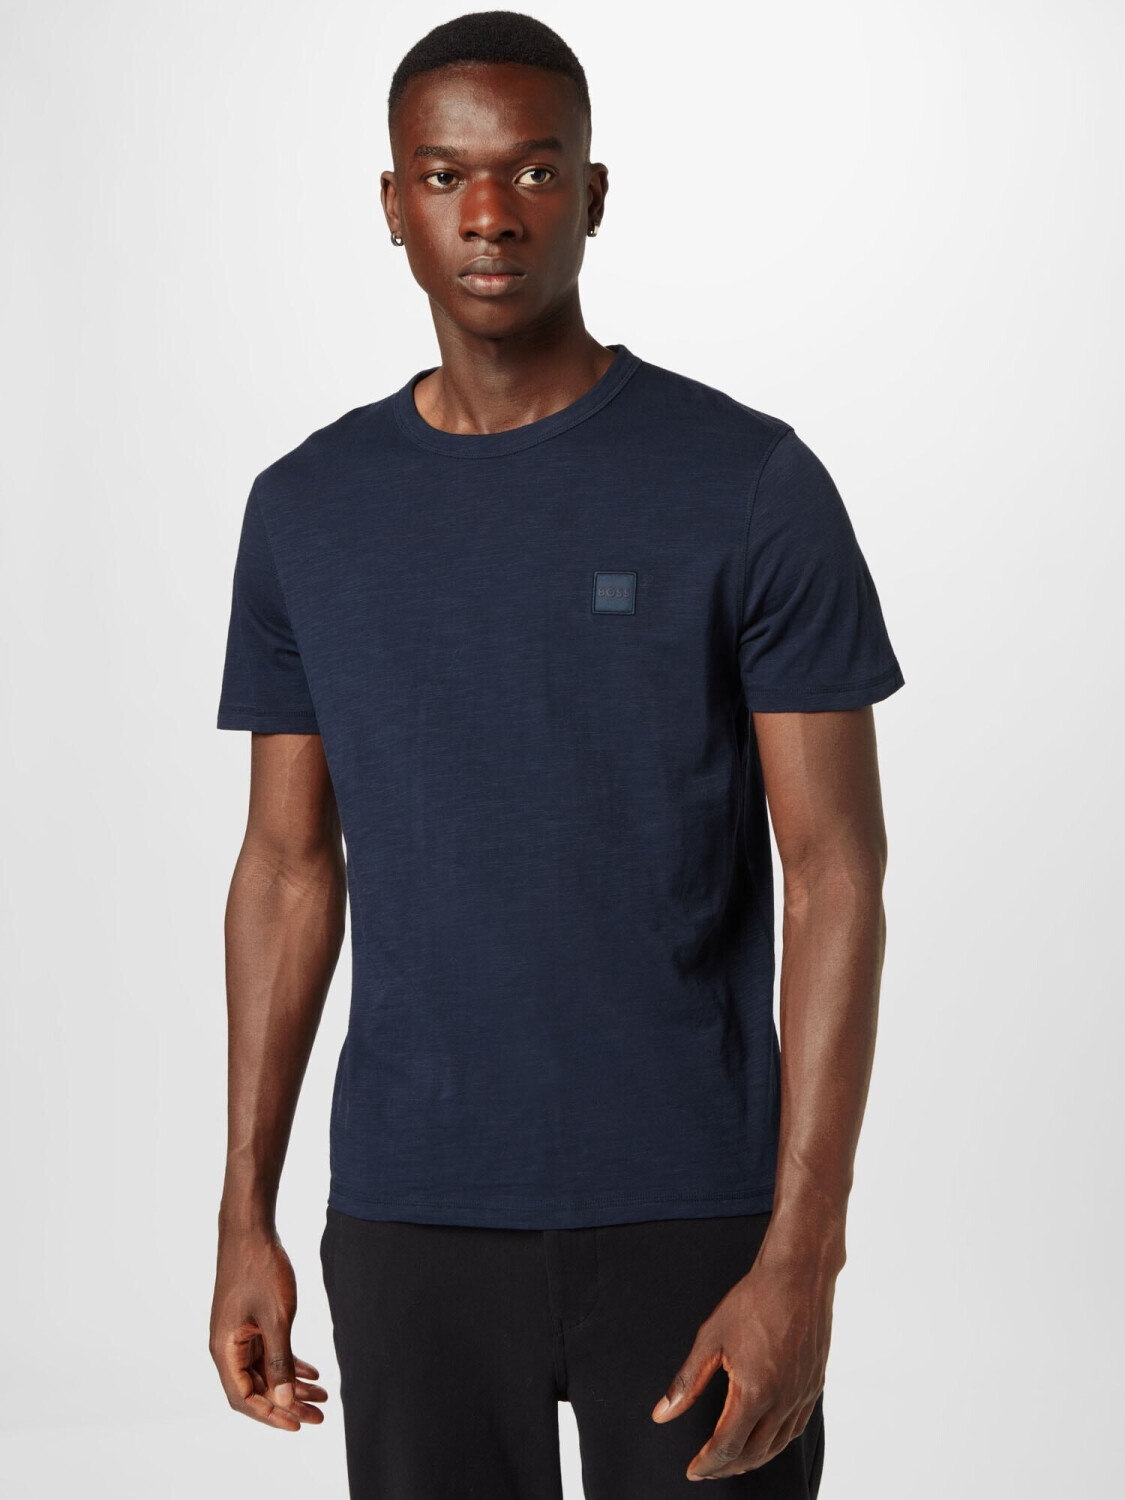 Hugo Boss Short Sleeve T-Shirt 29,99 | € bei Preisvergleich ab blau (50478771-404)